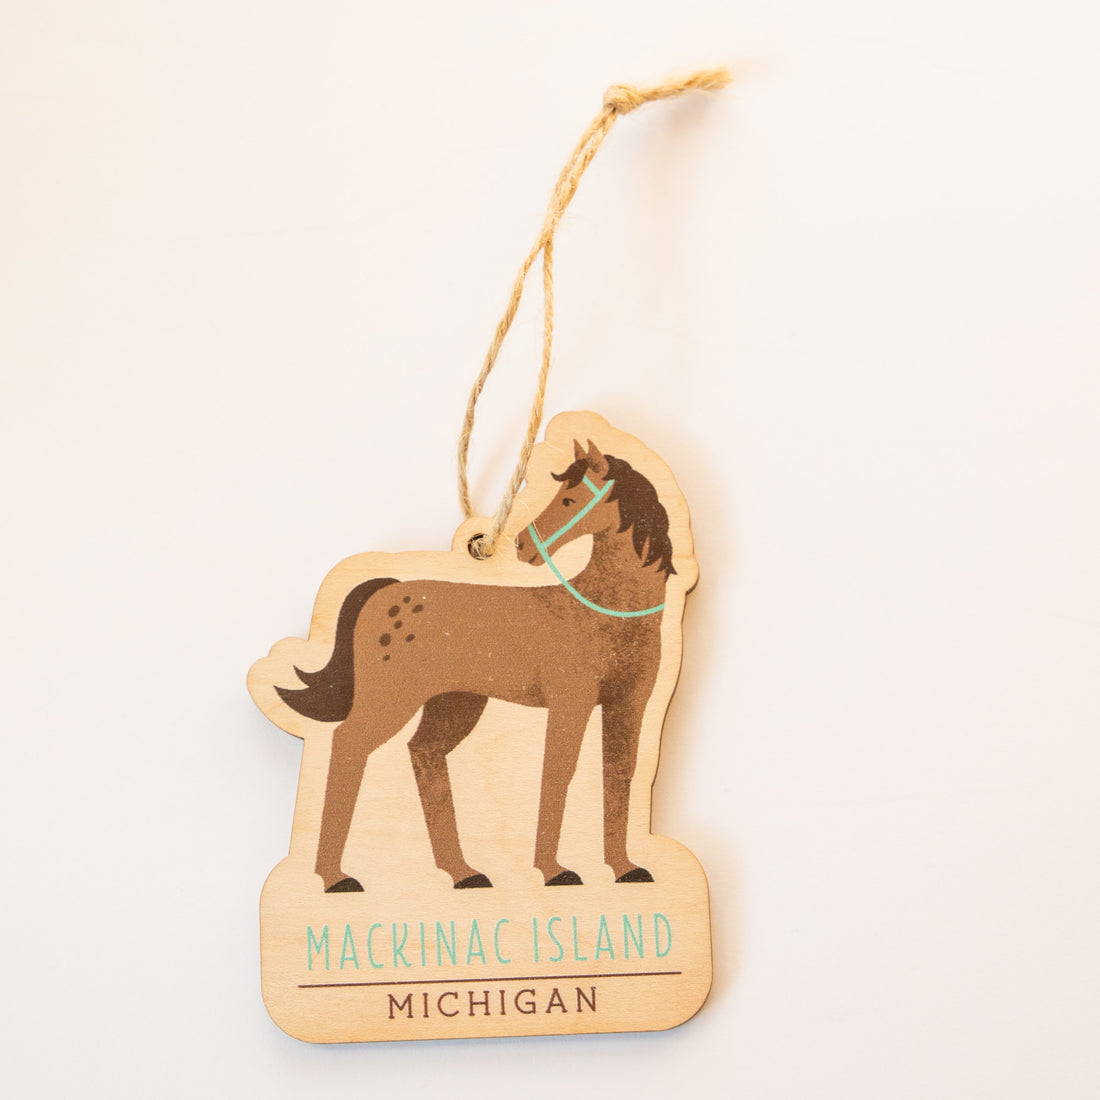 Island Girl Horse Wooden Ornament